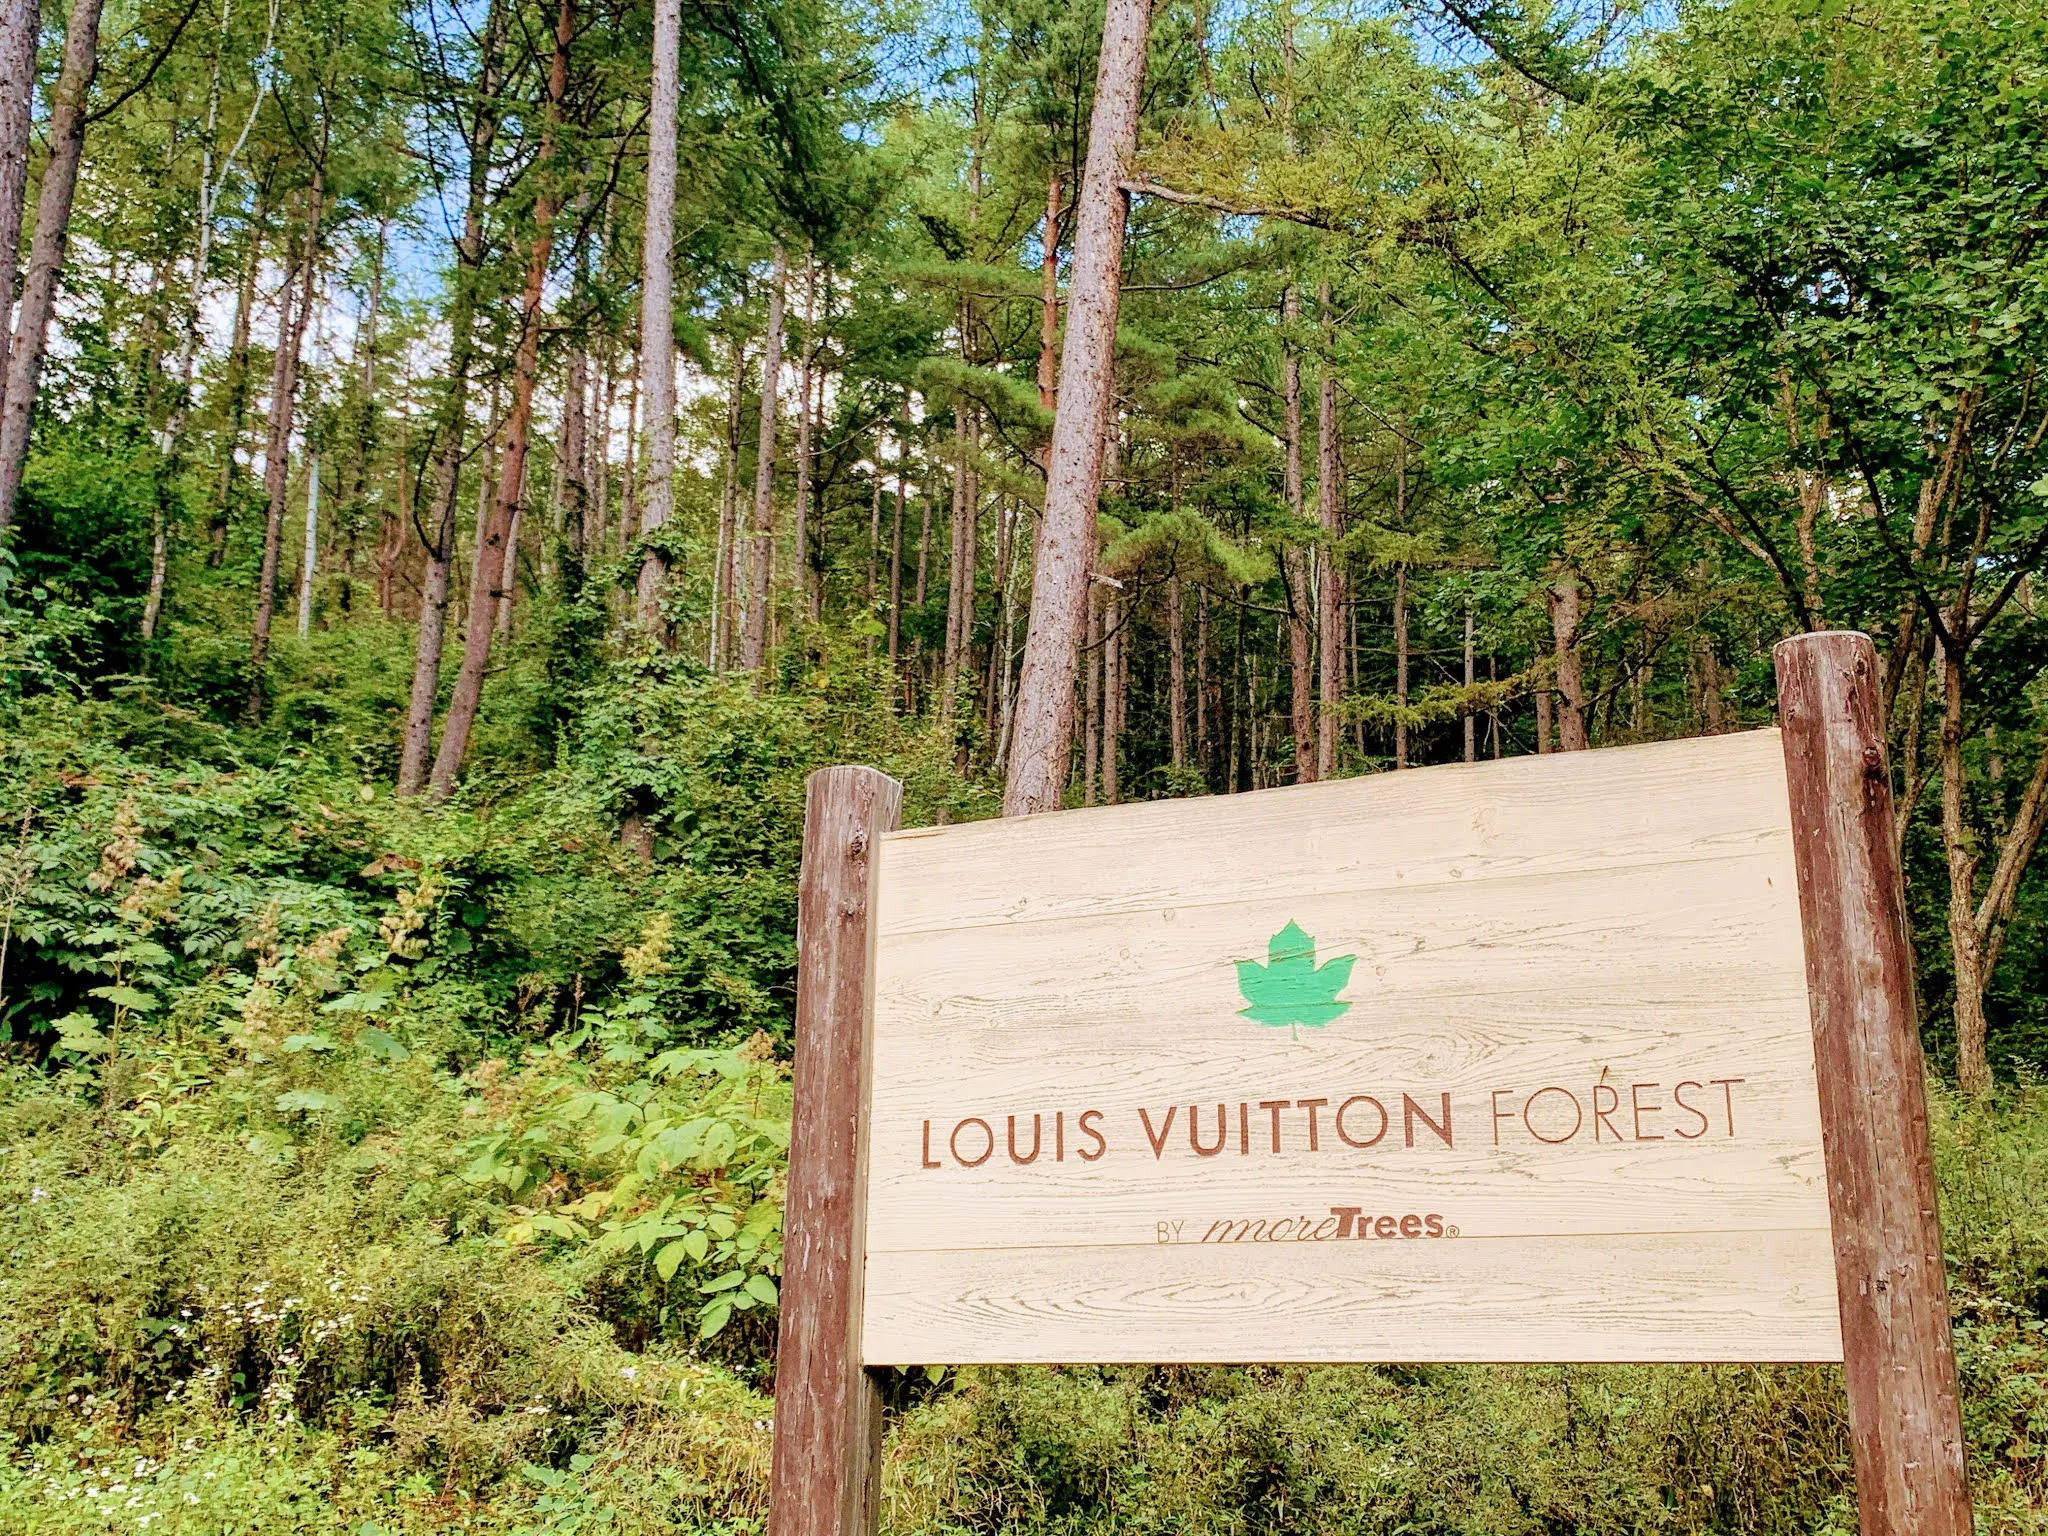 Louis vuitton forest